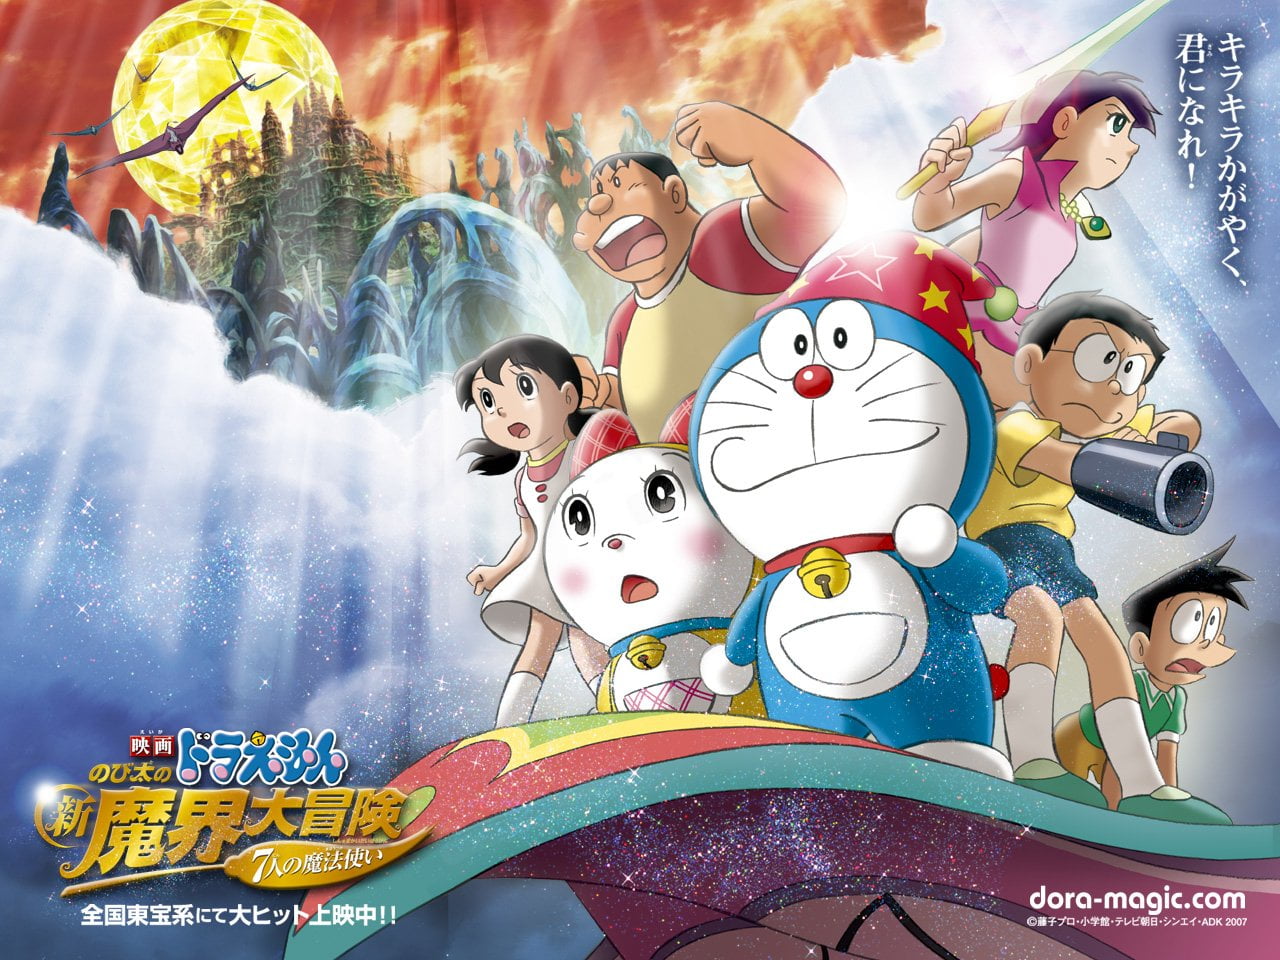 Doraemon movie poster, Anime, asia, people, image, computer Graphic